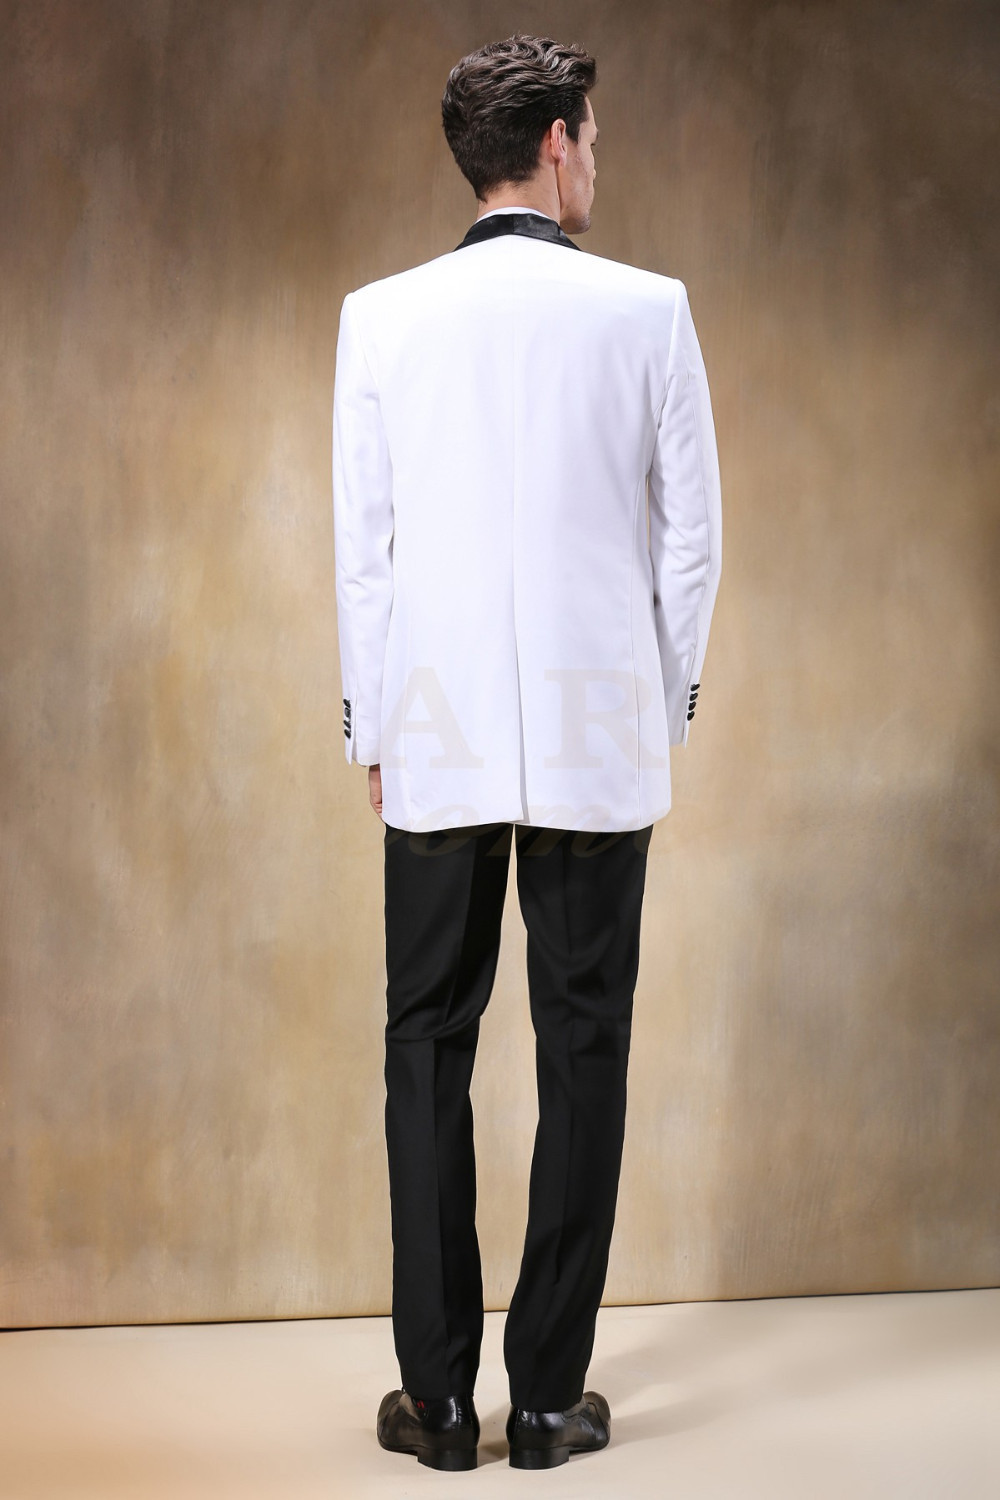 2015-Mens-Suits-Designs-Fashion-White-Wedding-Suits-Men-Party-Suits-Jacket-and-Pants-Brand-Design-Top-Quality-5